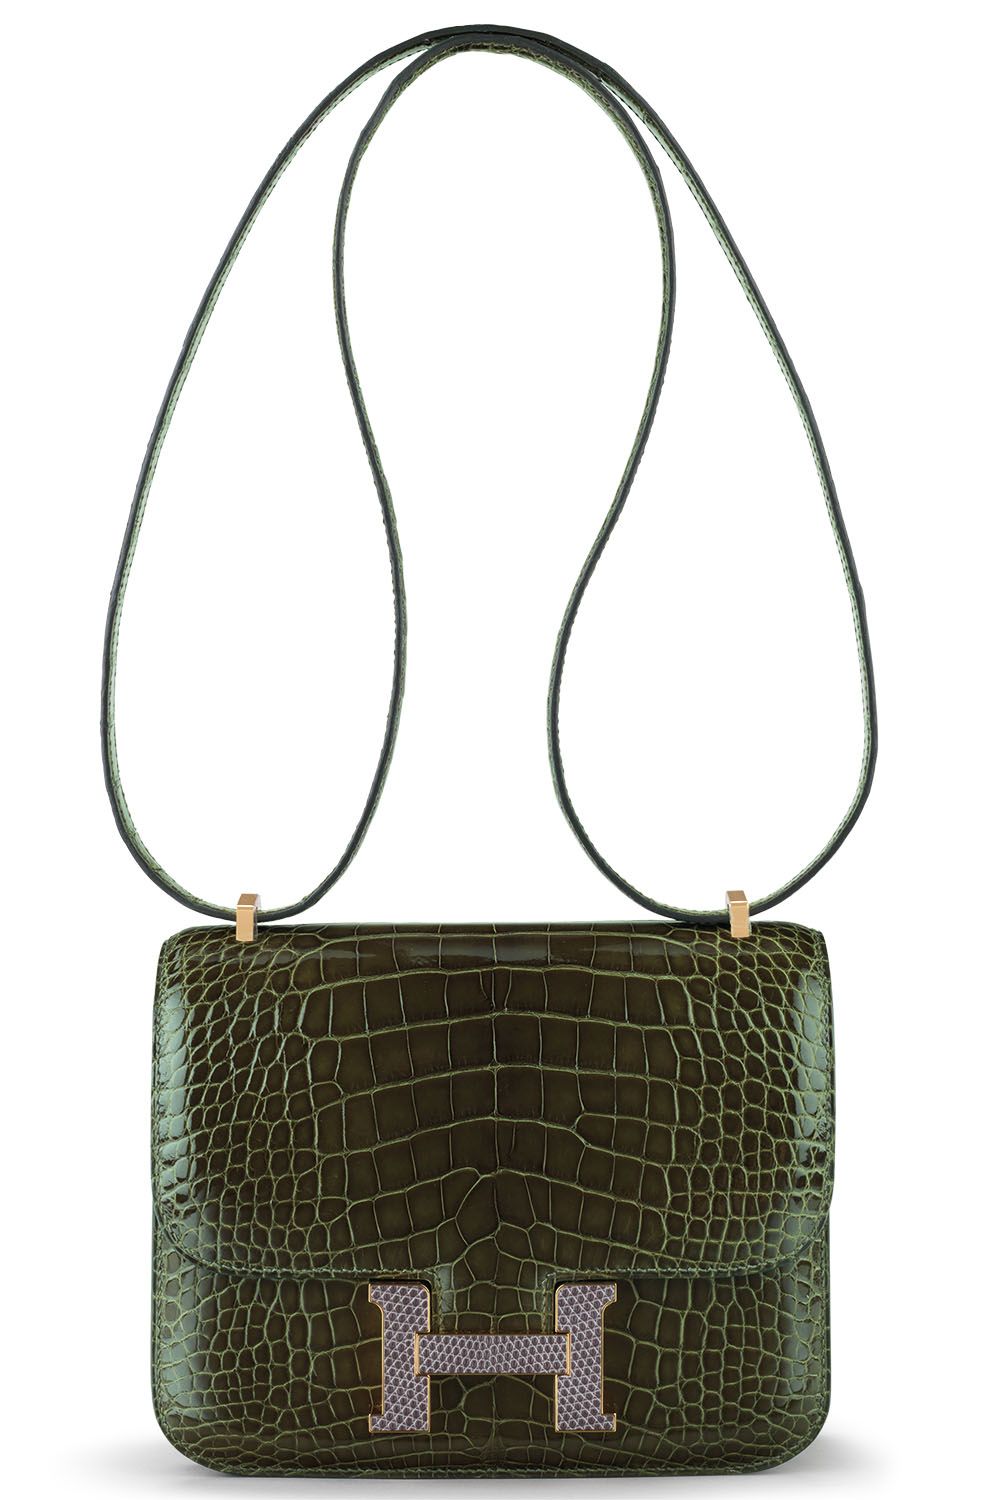 Hermès Handbag: Birkin Bag Sells for $300,000 at Auction